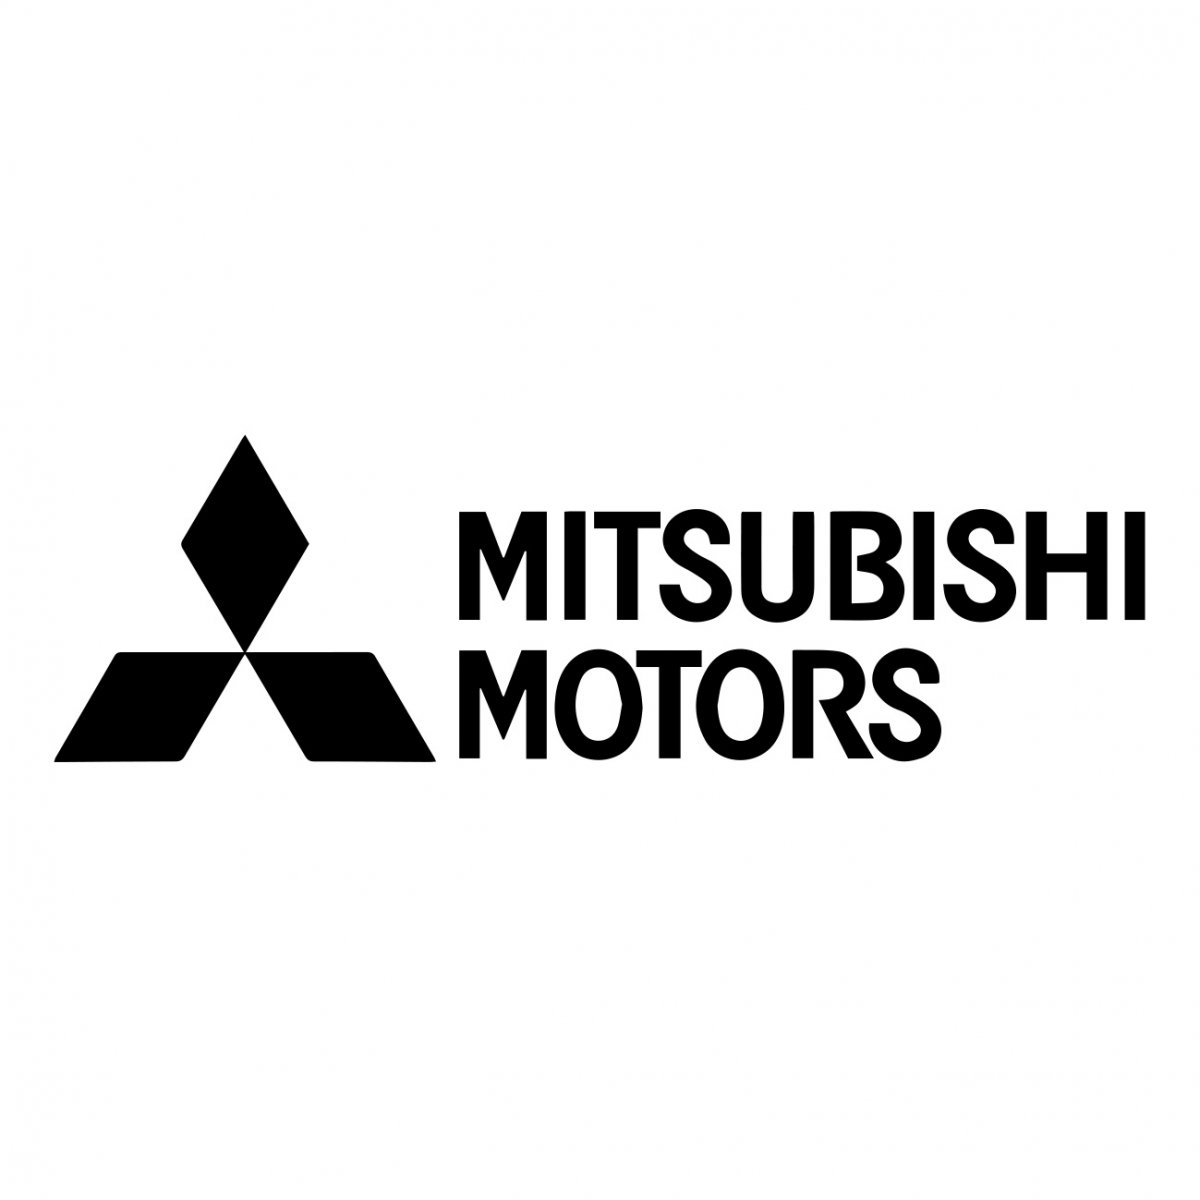 mitsubishi motors logo - Vis alle stickers - FolieGejl.dk